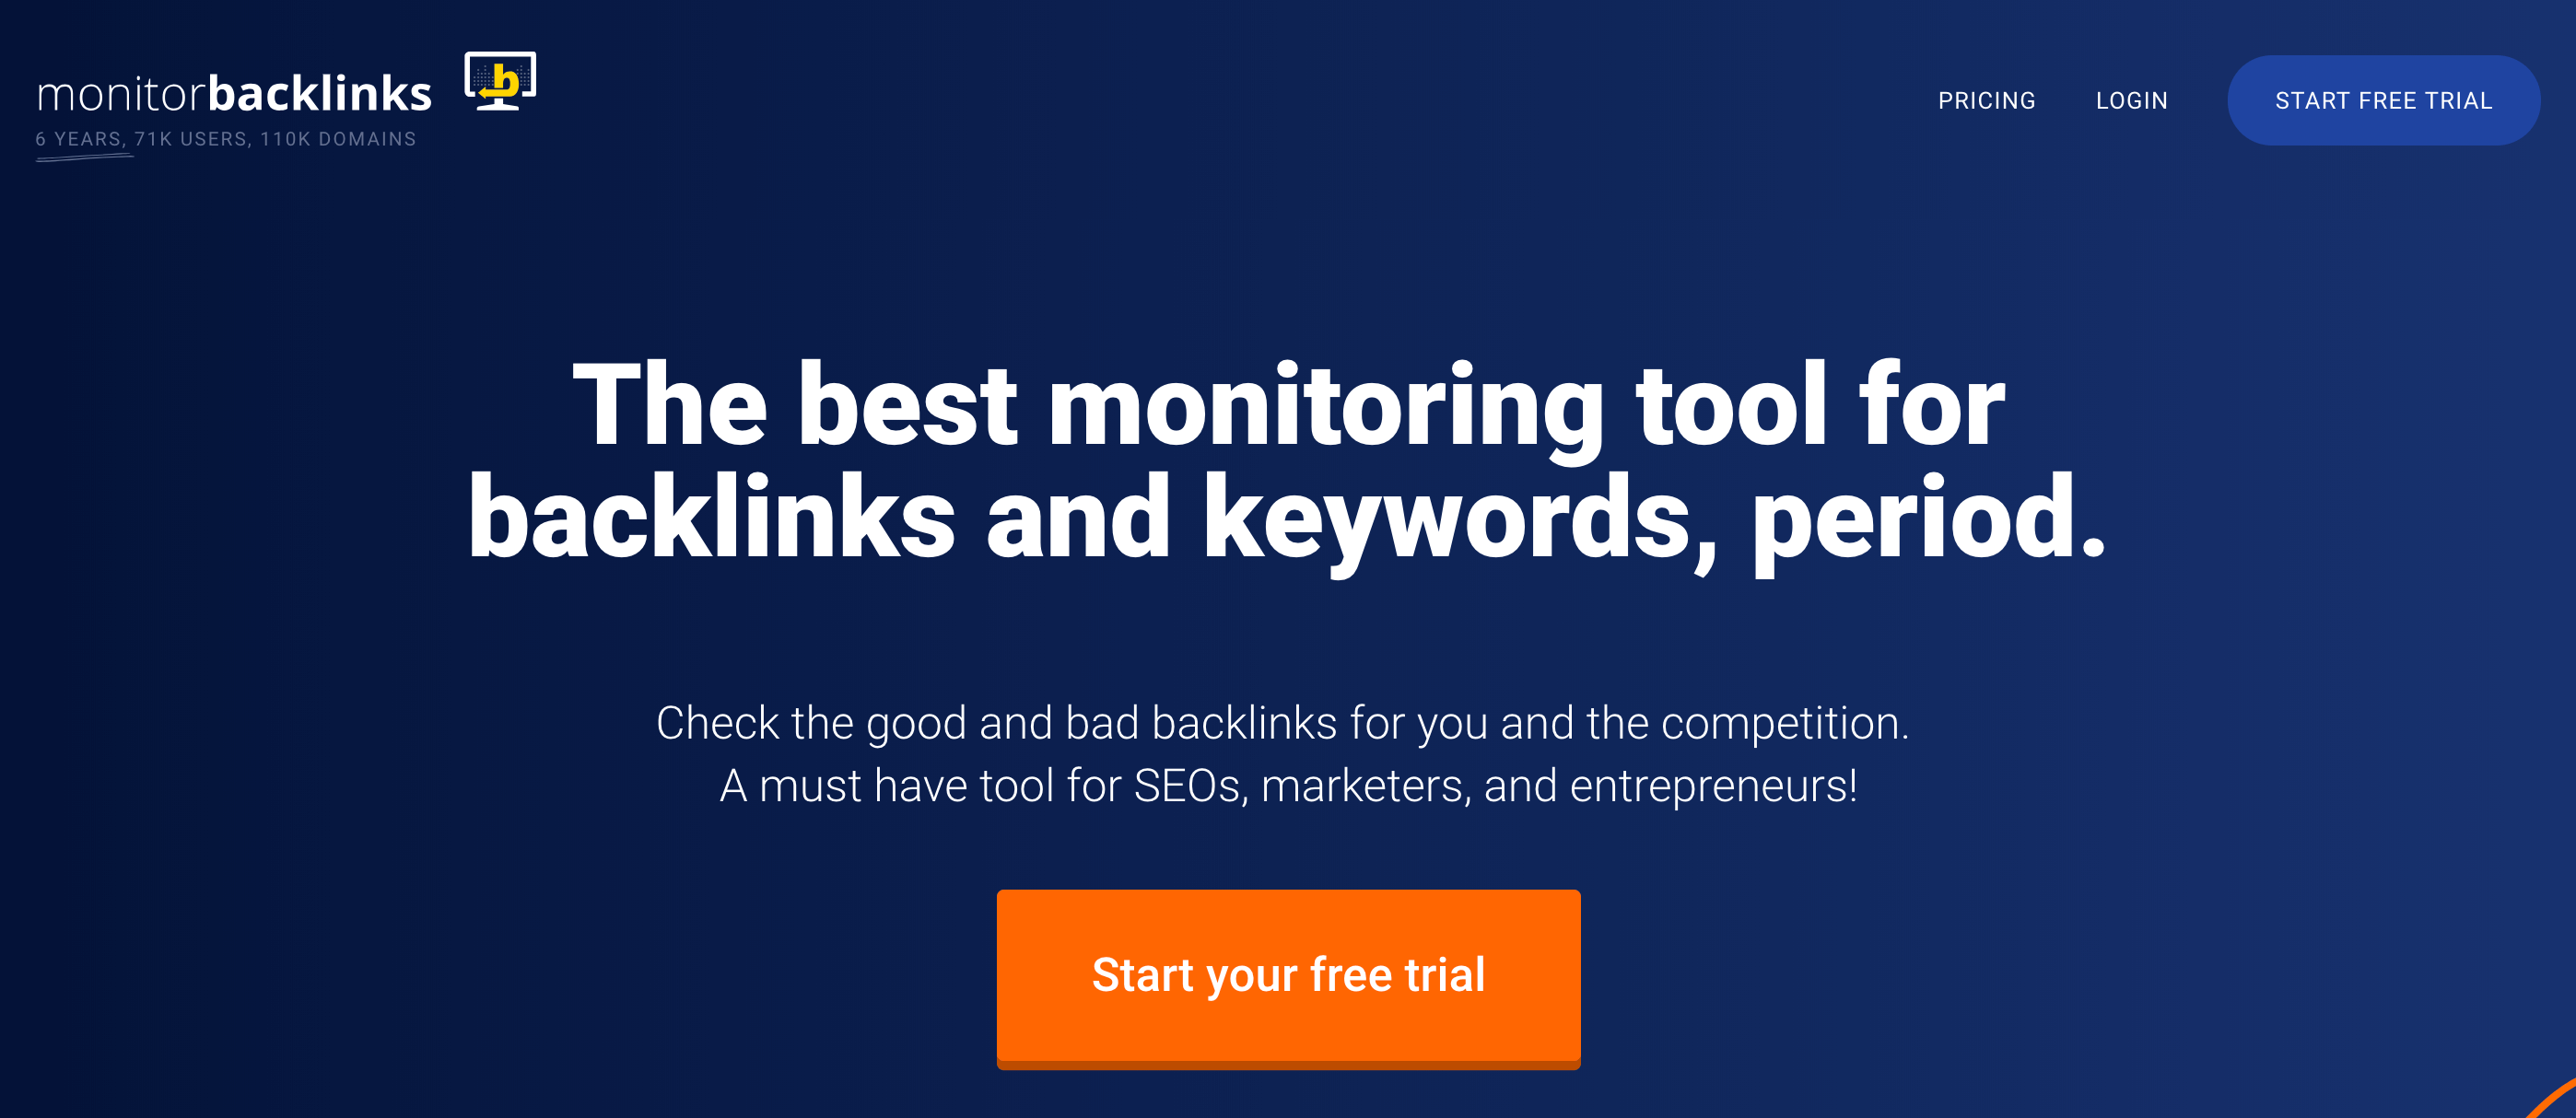 monitorbacklinks competitor analysis tools